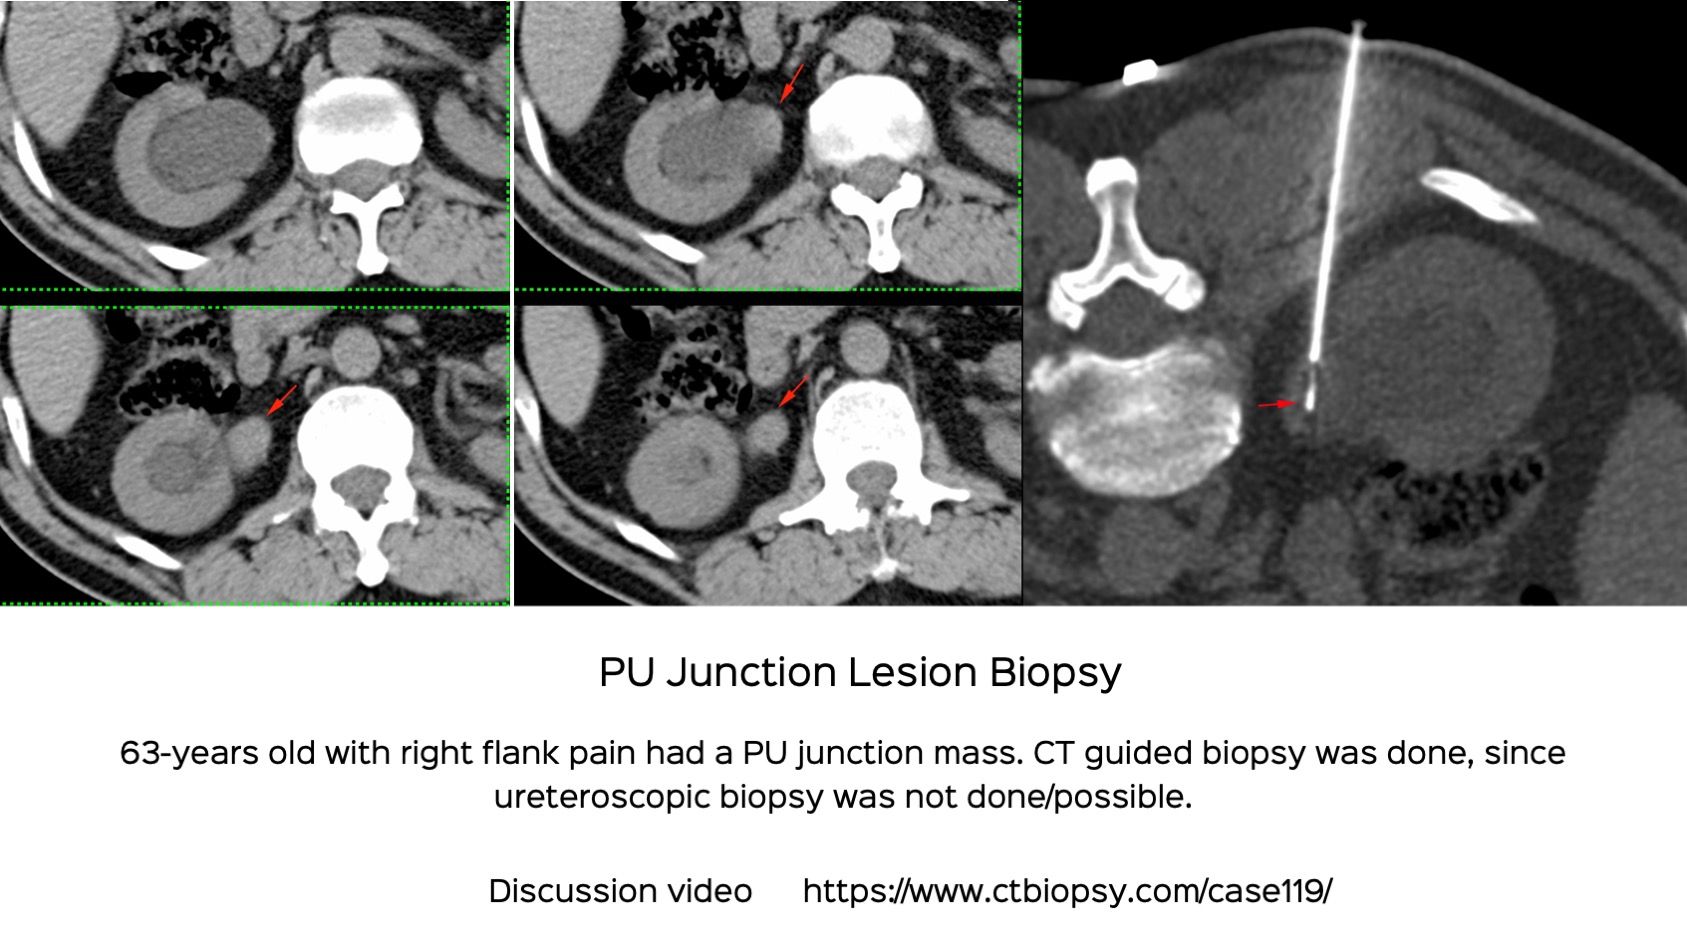 Case 119: Pelvi-Ureteric Junction (PUJ) and Medial Perirenal Perihilar Biopsies